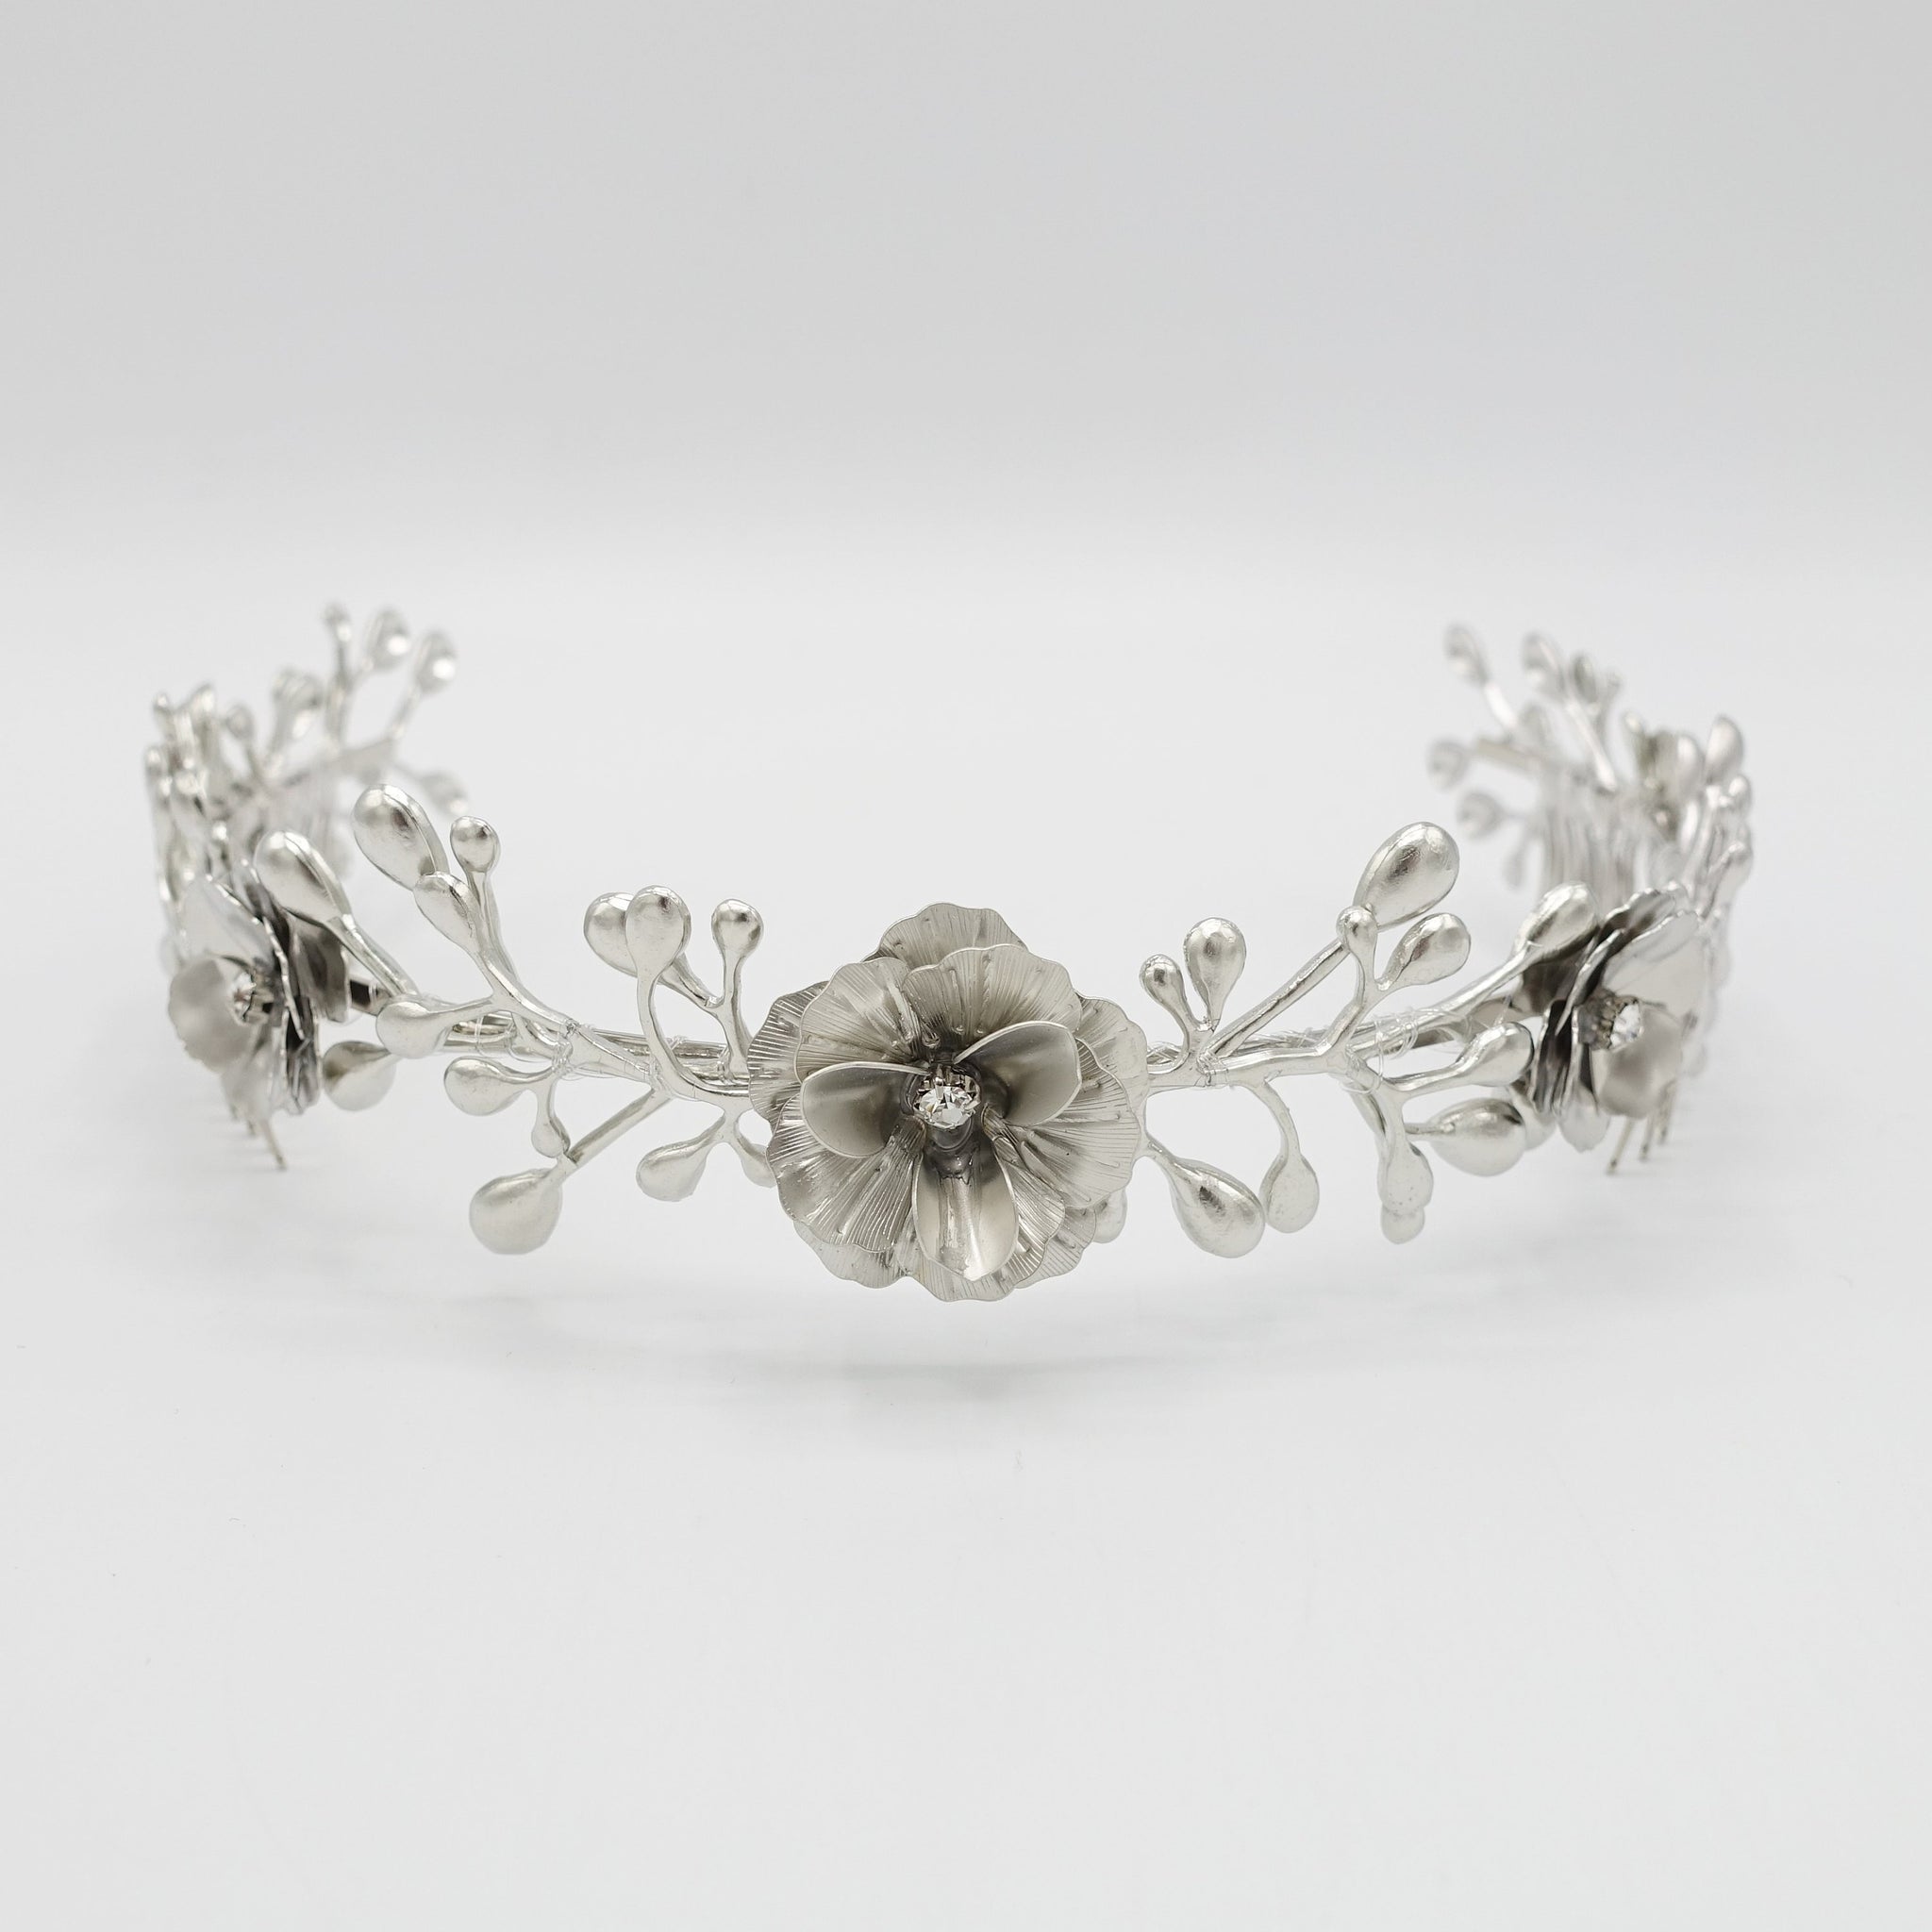 VeryShine Headband Silver bridal tiara headband flower branch wedding hairband for brides